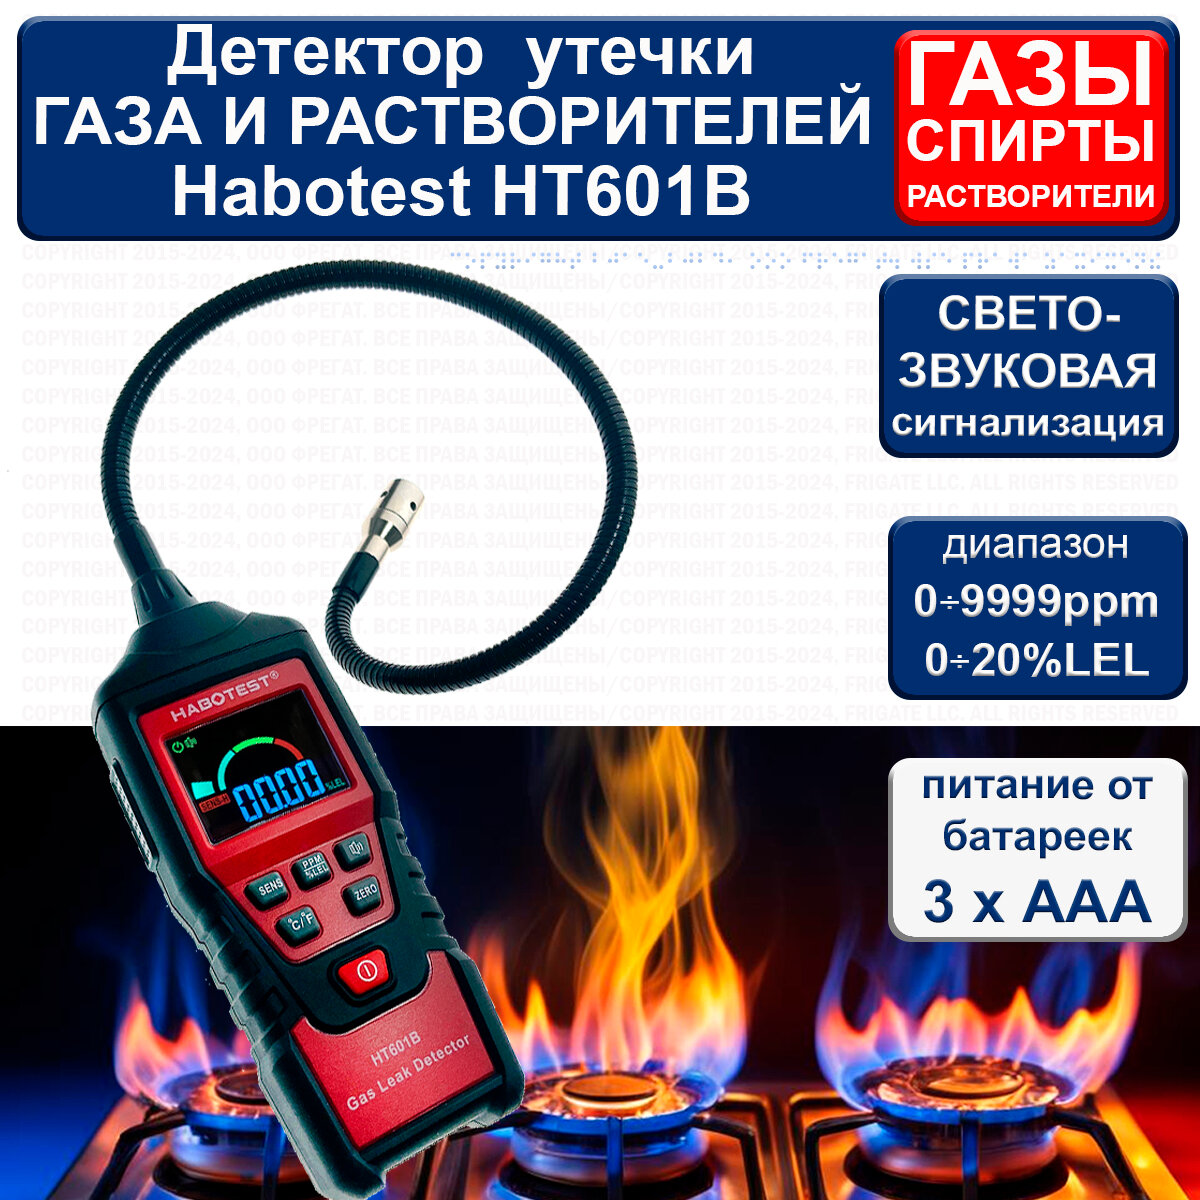 Детектор утечки газа Habotest HT601B